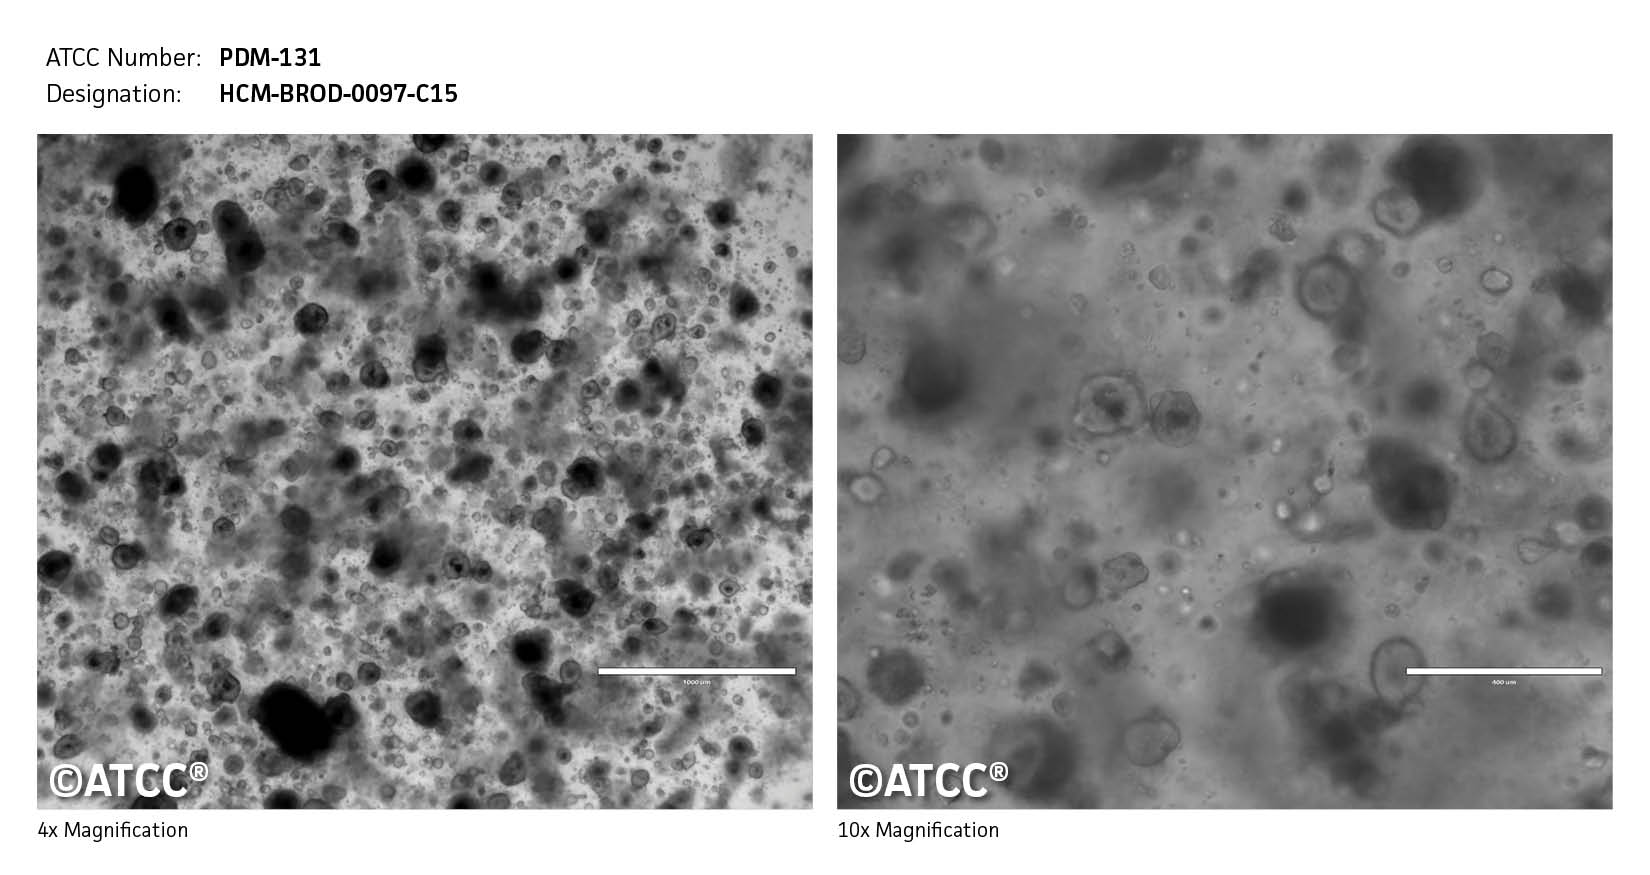 ATCC PDM-131 Cell Micrograph